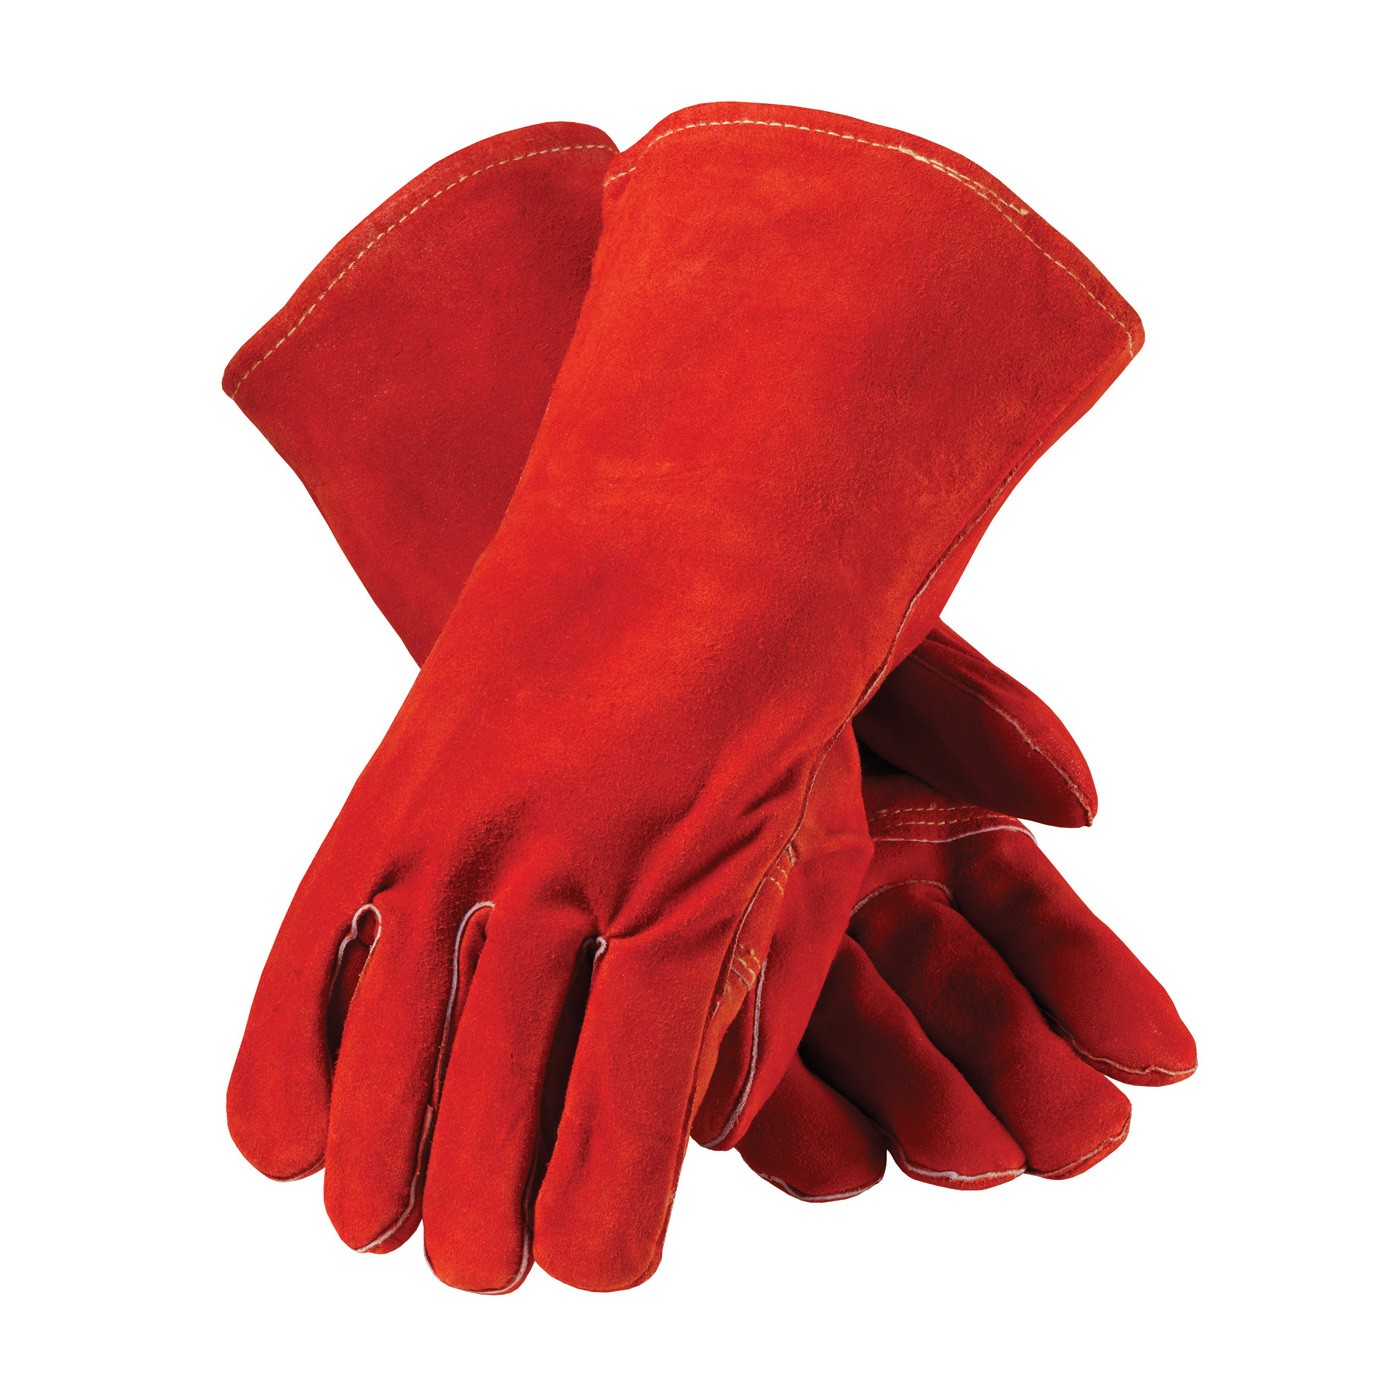 Red Viper Welding Glove, Select Shoulder,Cotton Lined,Kevlar Stitch